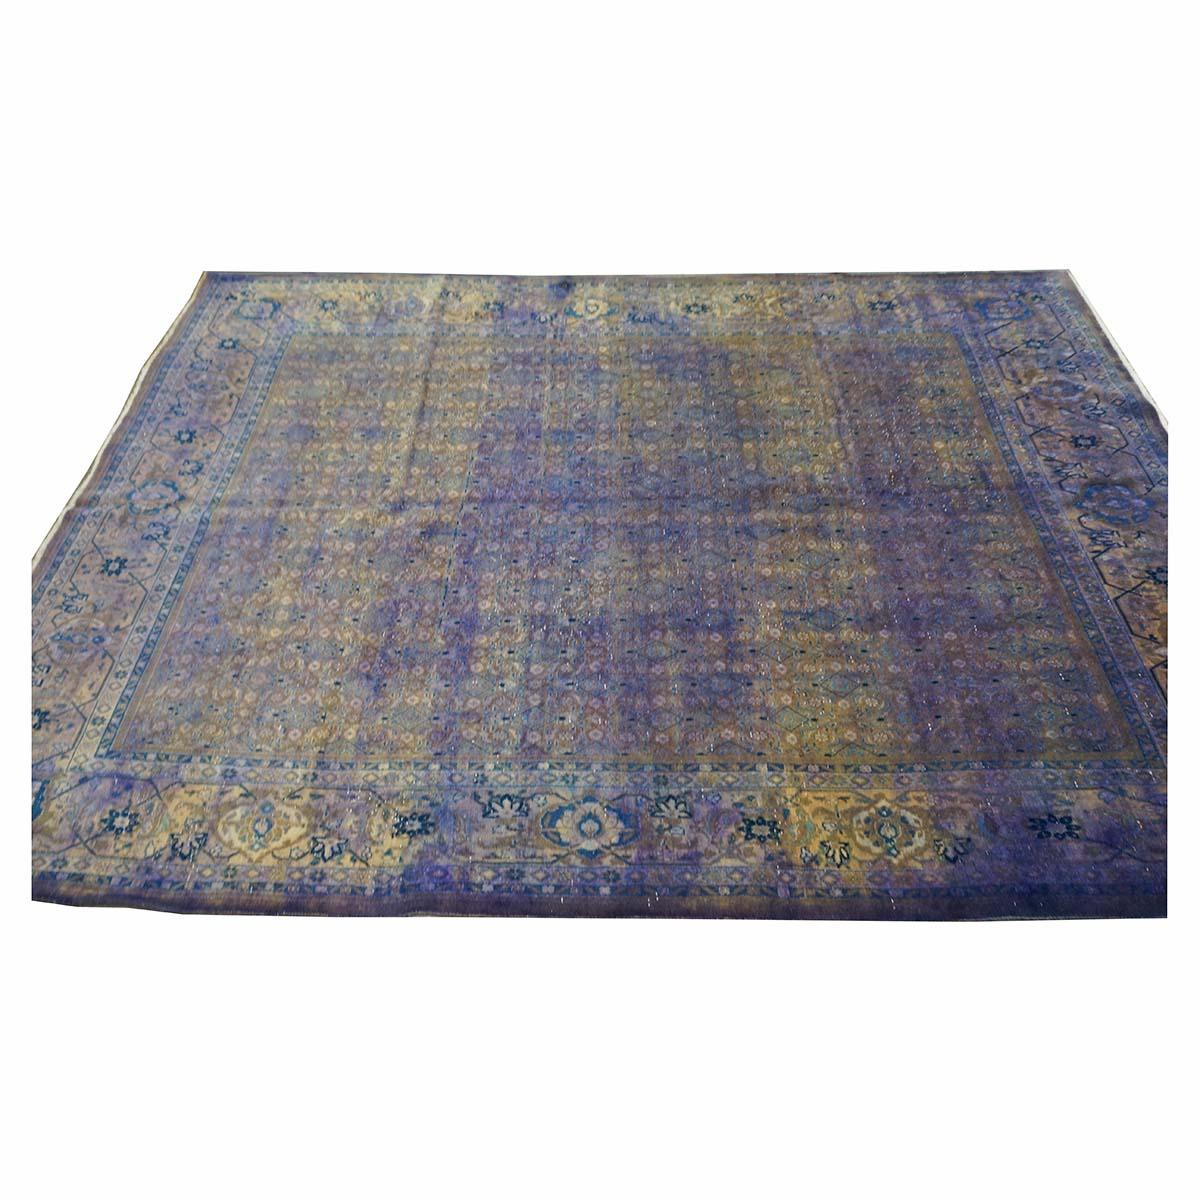 1950er Jahre Vintage Persian Mahal Modern Overdye 7x10 Lila Handgefertigter Teppich (Handgewebt) im Angebot